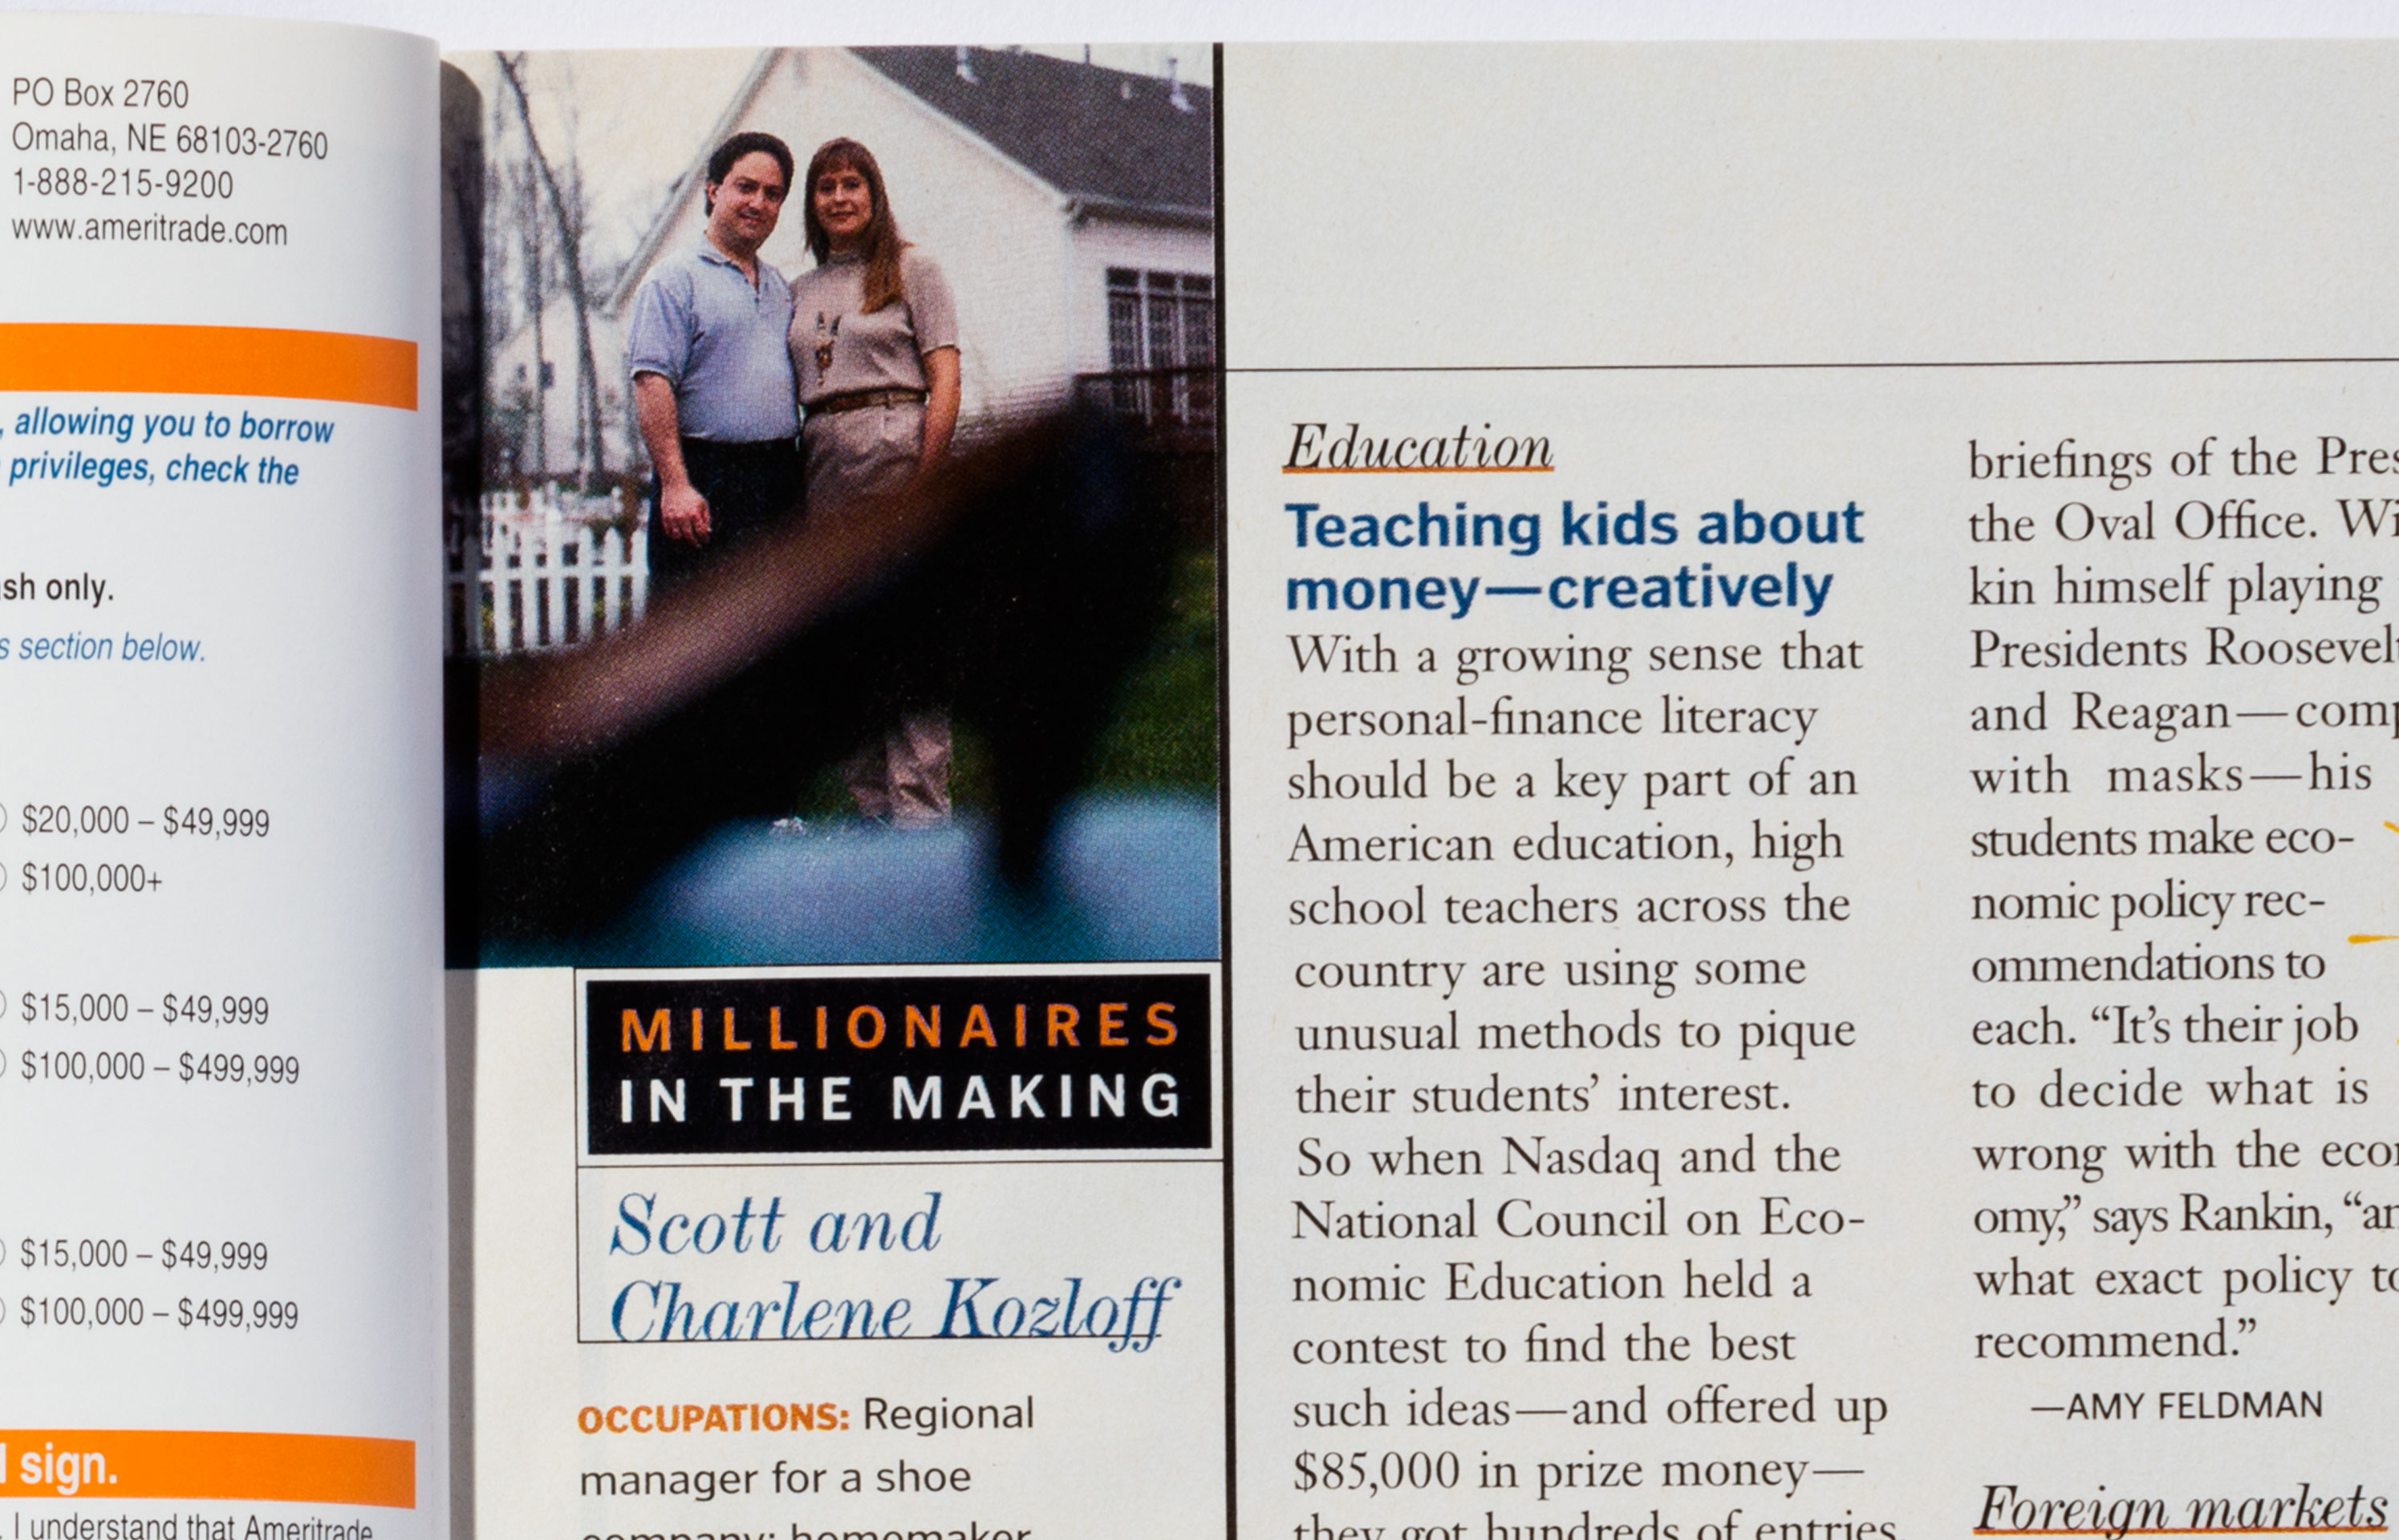 Scott and Charlene Kozloff pictured in Money’s June 2001 issue.